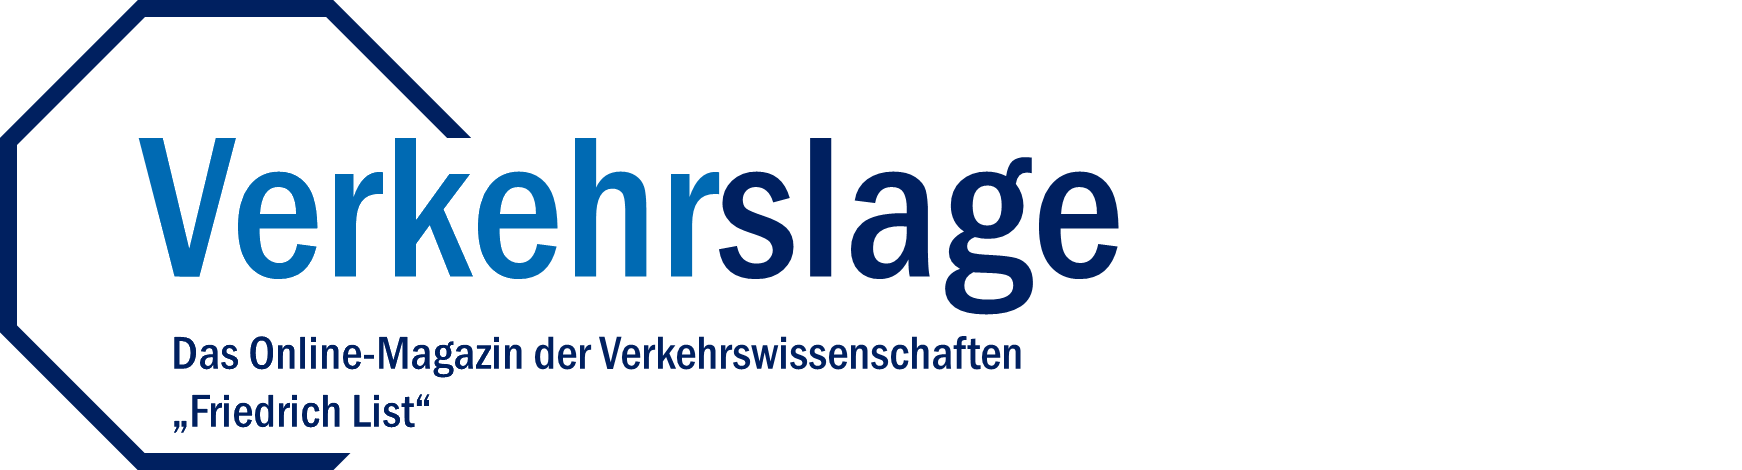 Logo of the faculty magazine "Verkehrslage"